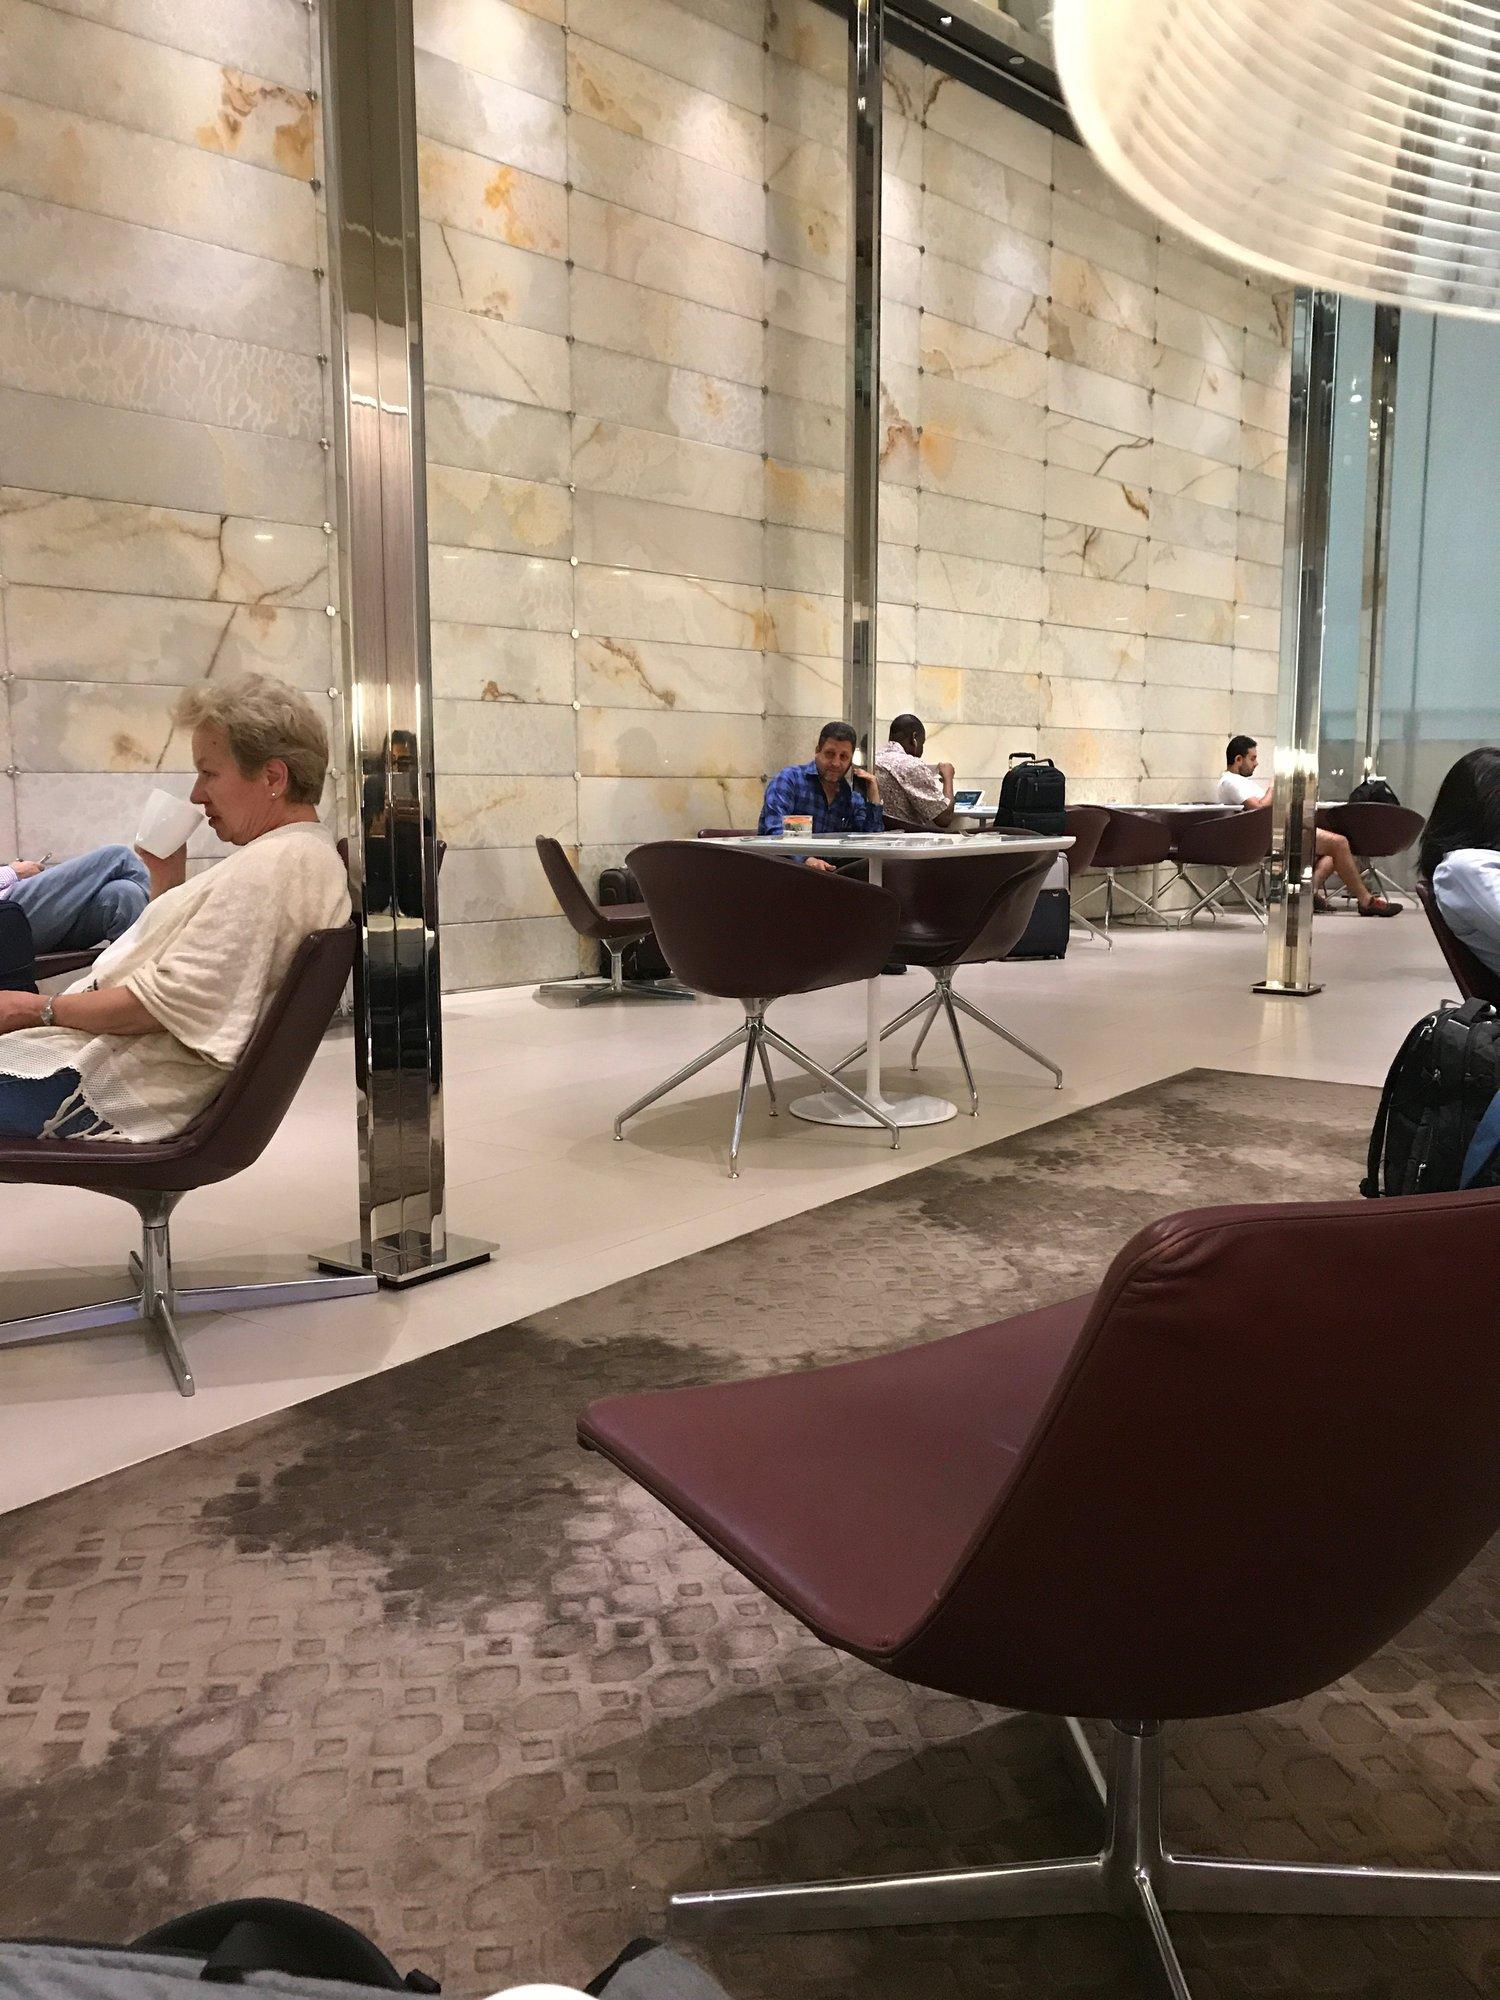 Al Maha Arrival Lounge image 2 of 3